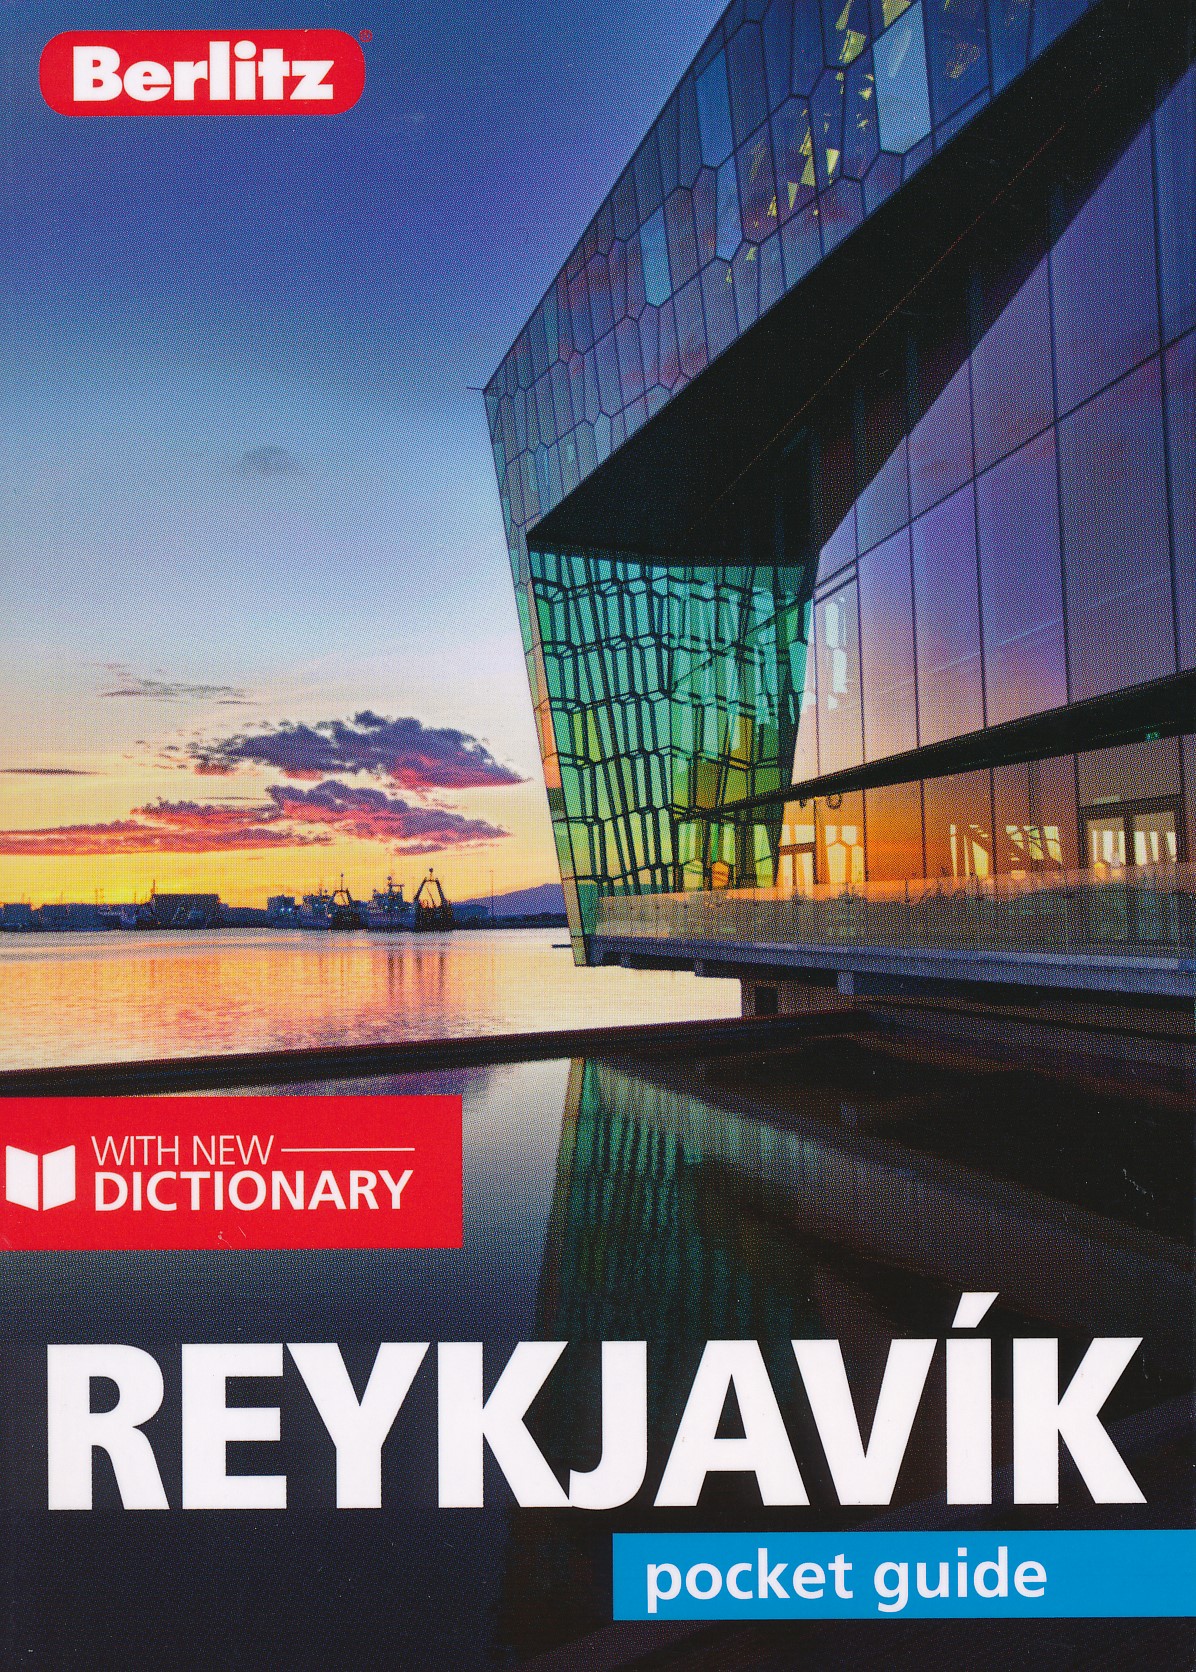 Online bestellen: Reisgids Pocket Guide Reykjavik | Berlitz